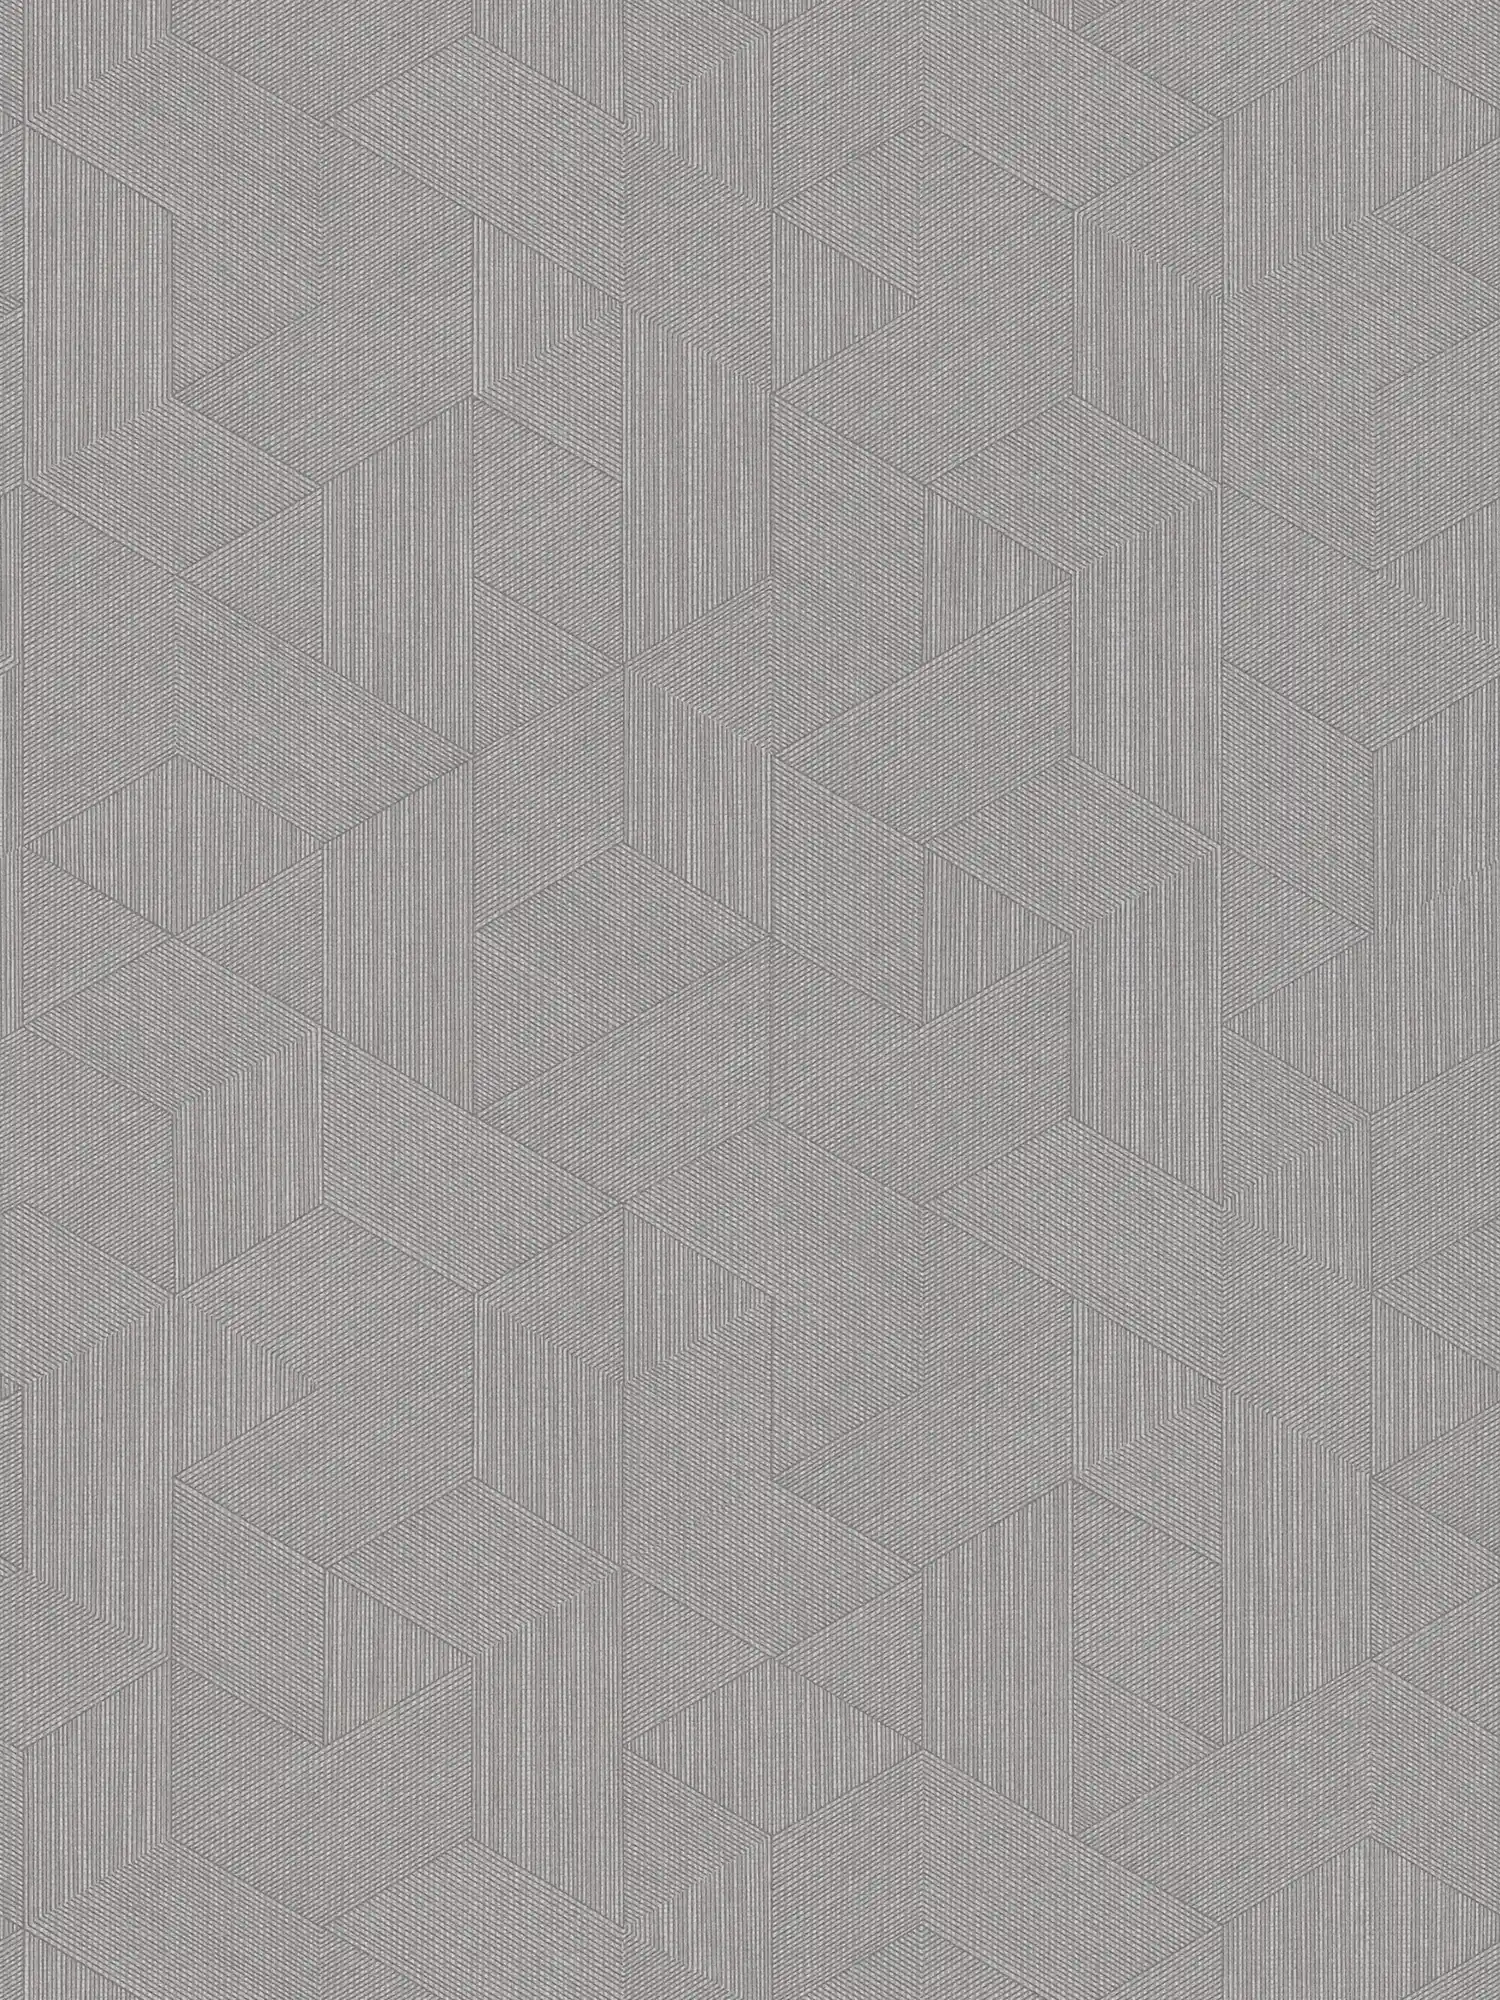 Tapete Grau mit Grafik-Muster & Glanzeffekt – Grau, Braun
